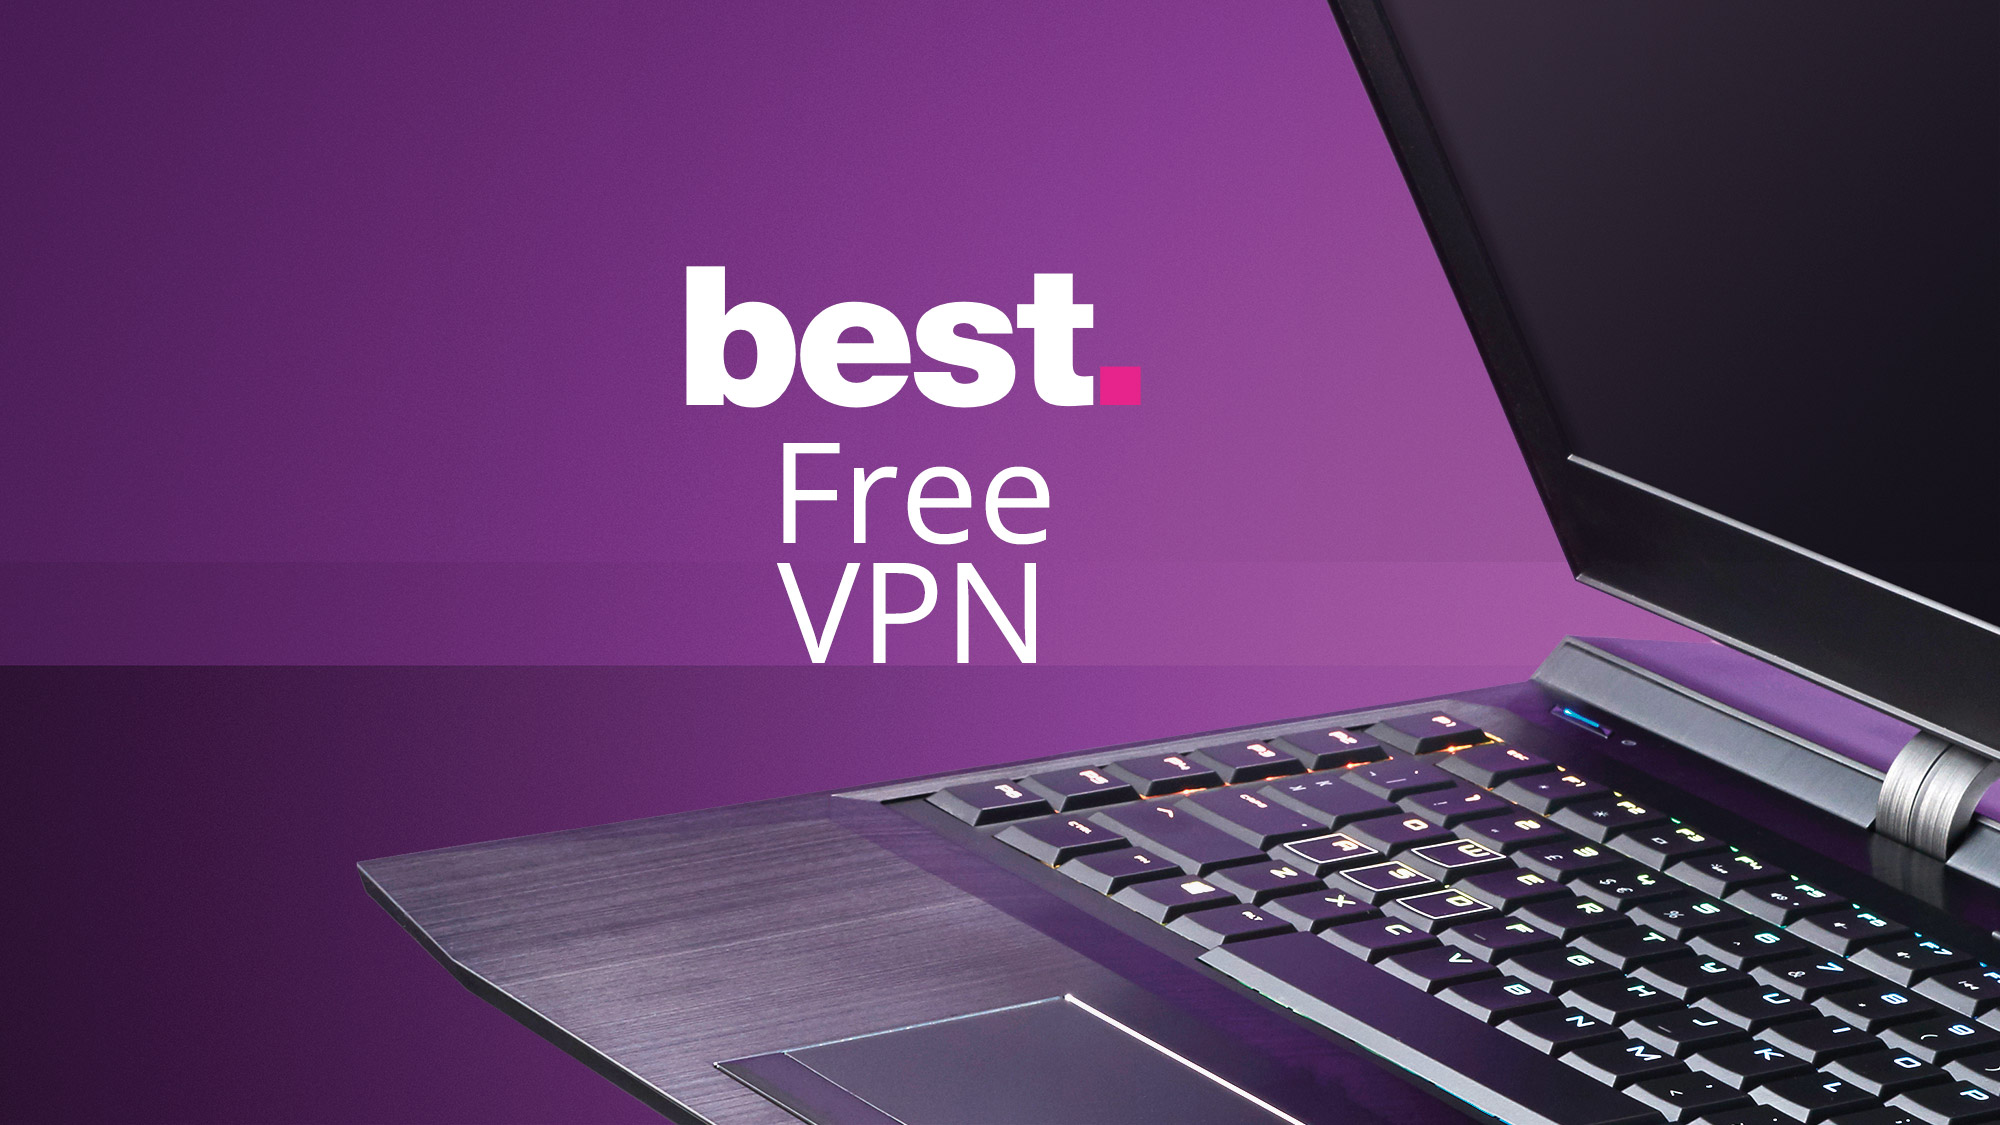 the best free vpn for macbook